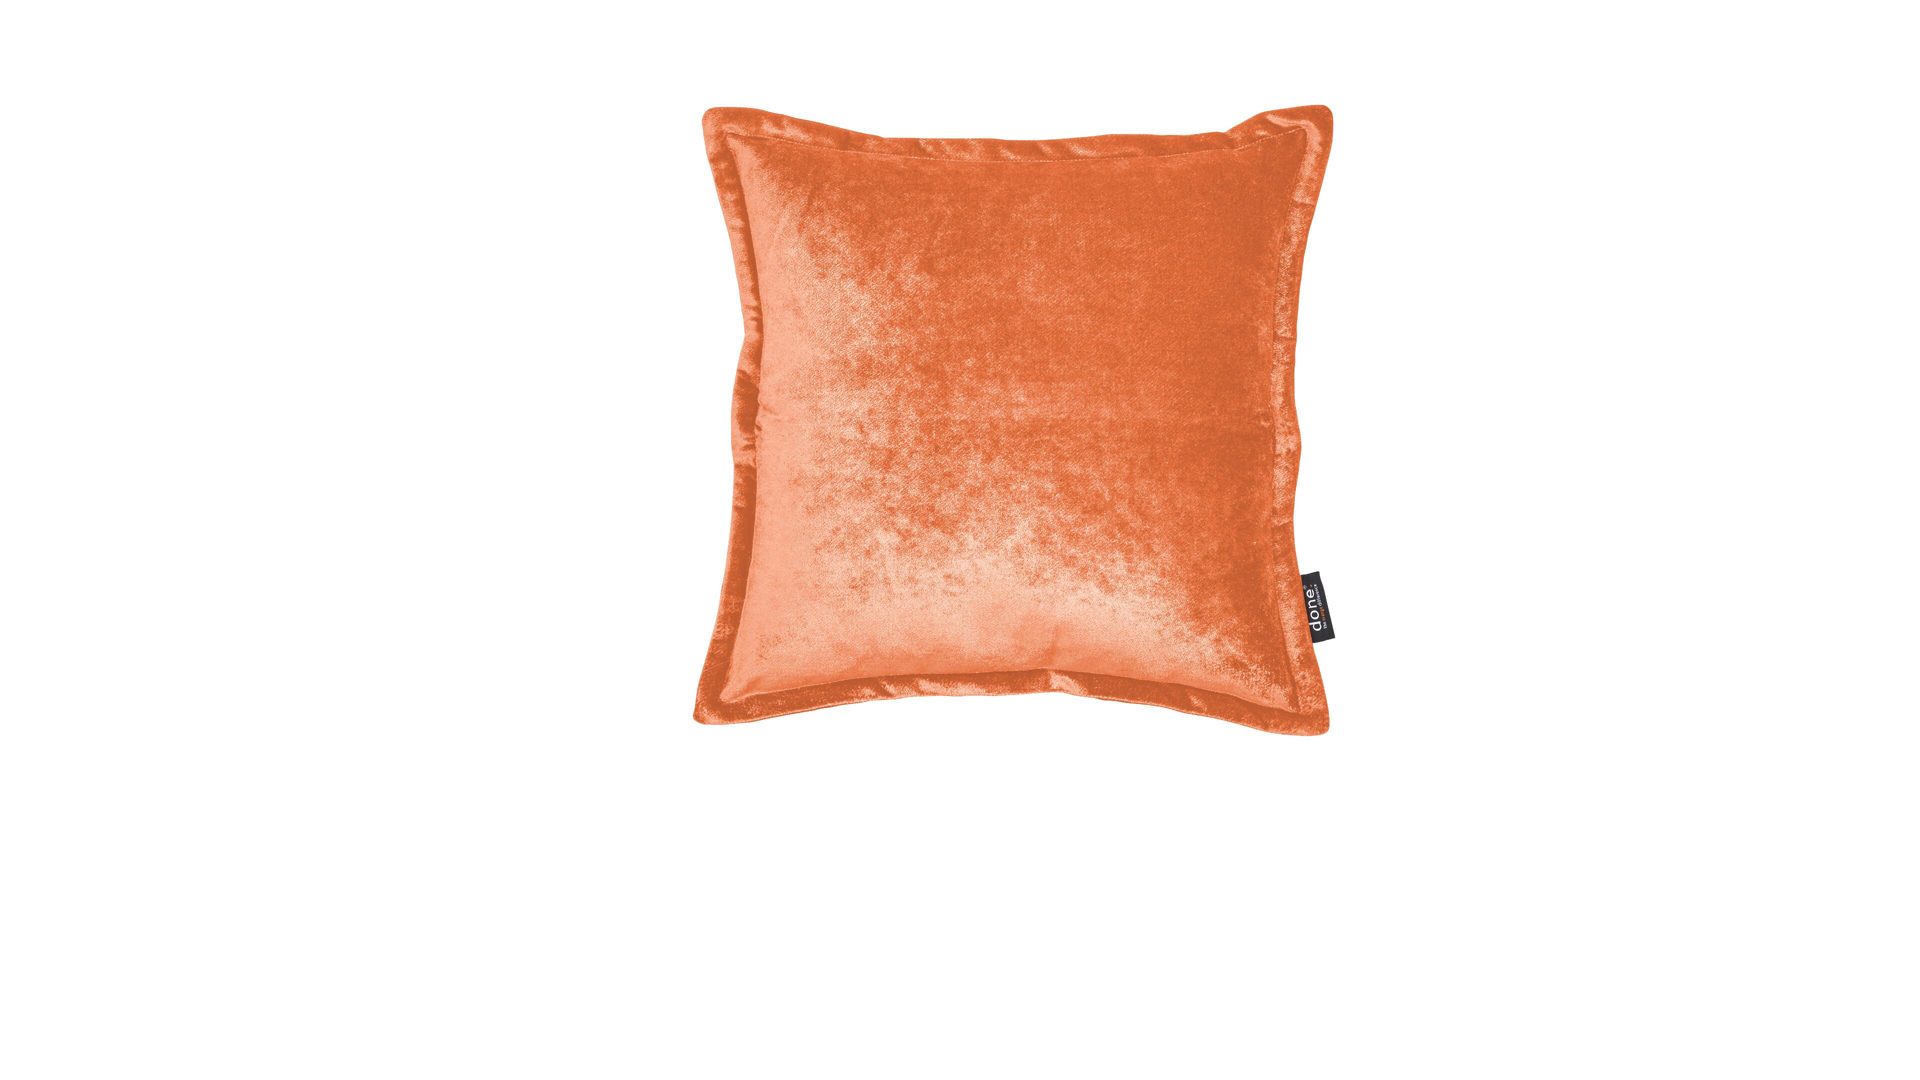 Kissenbezug /-hülle Done by karabel home company aus Stoff in Orange Done Kissenhülle Cushion Glam korallenfarbener Samt – ca. 45 x 45 cm